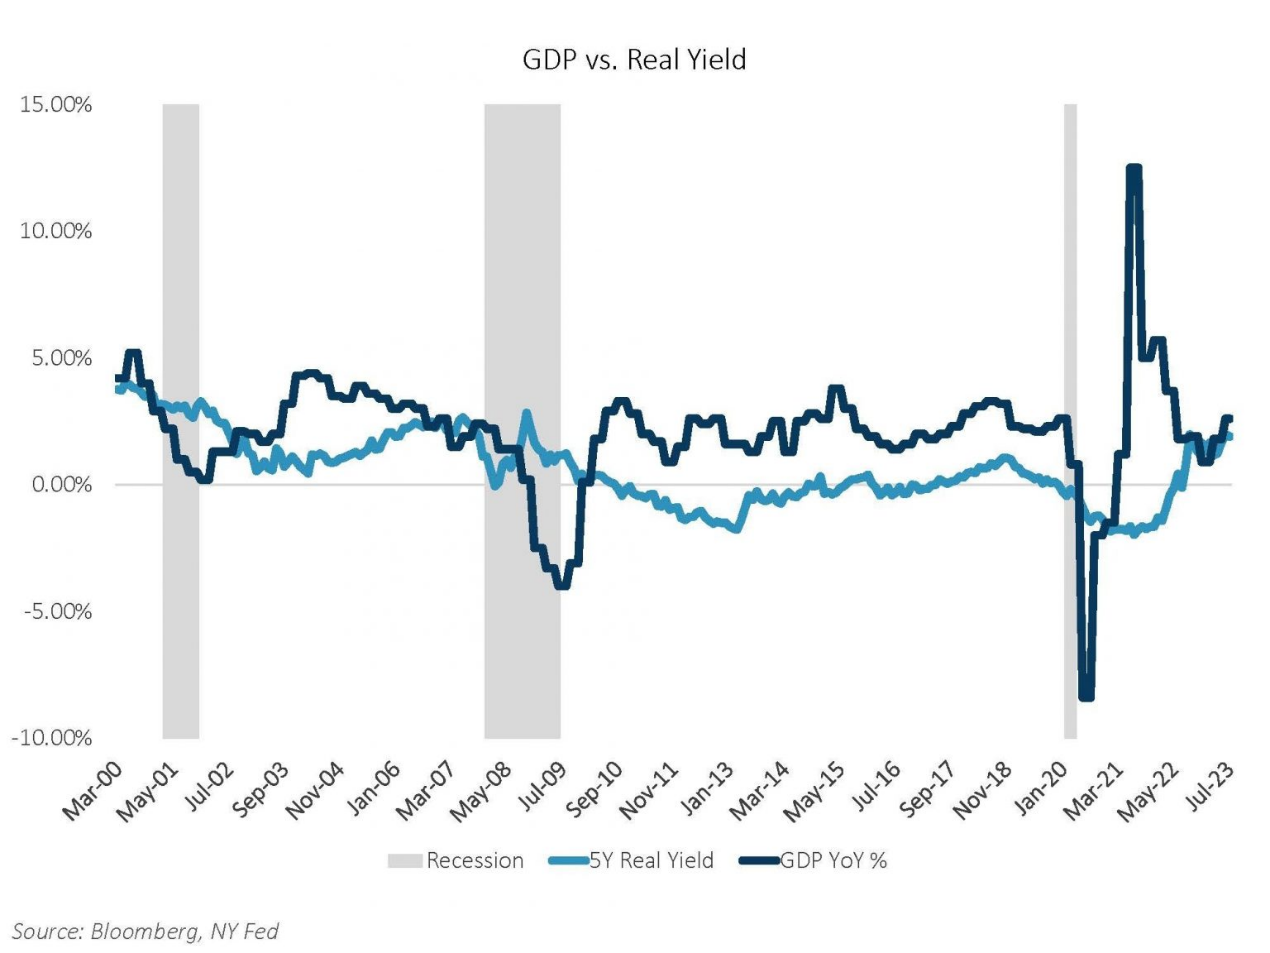 GDP vs Real Yield